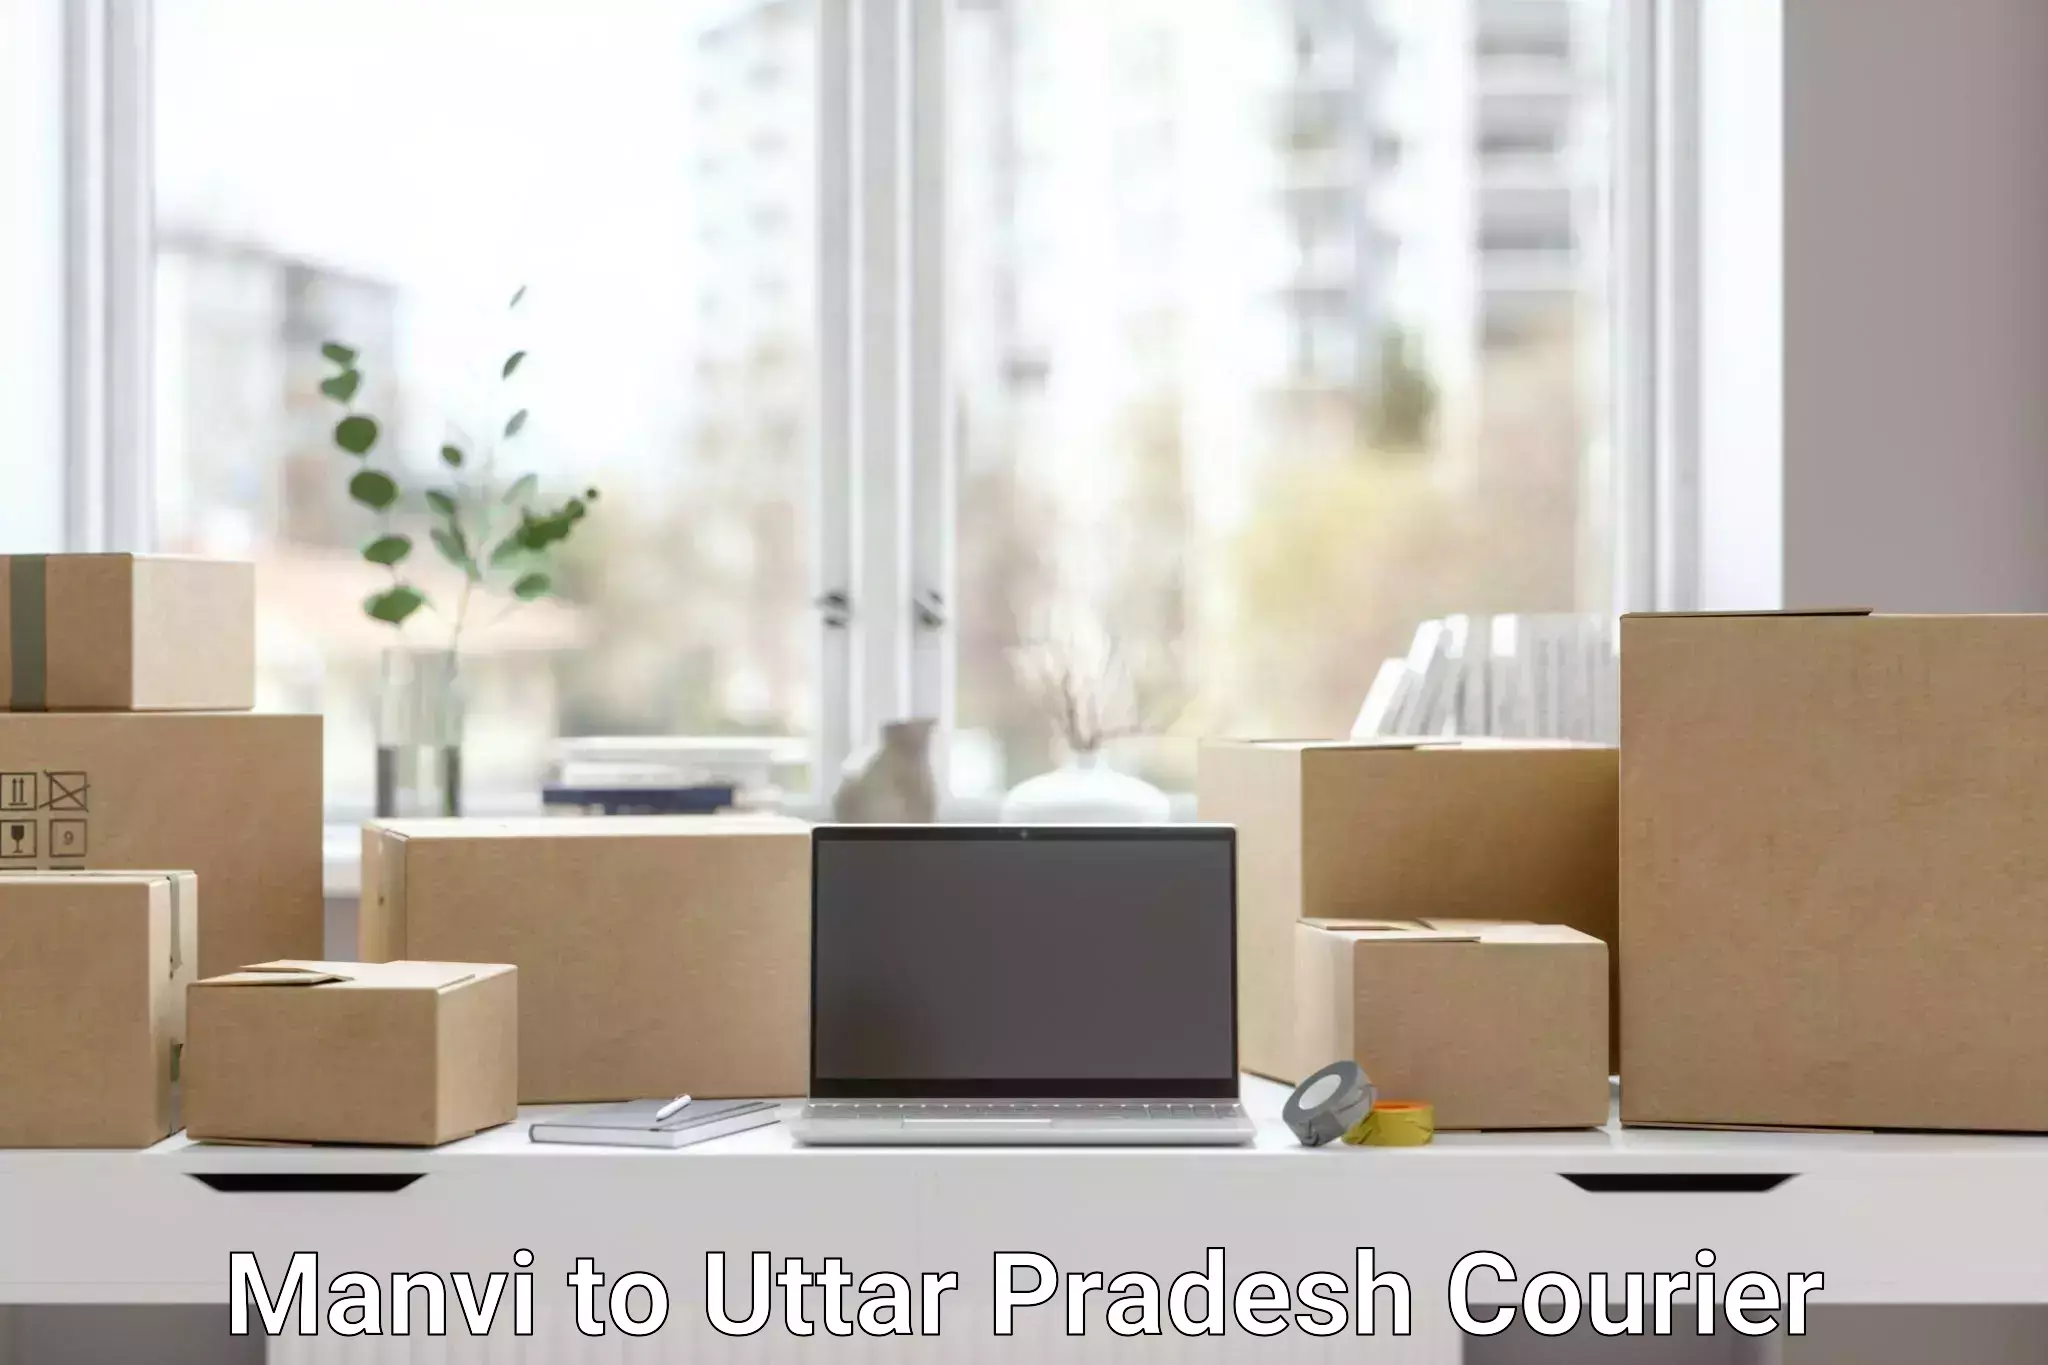 Efficient logistics management Manvi to Uttar Pradesh